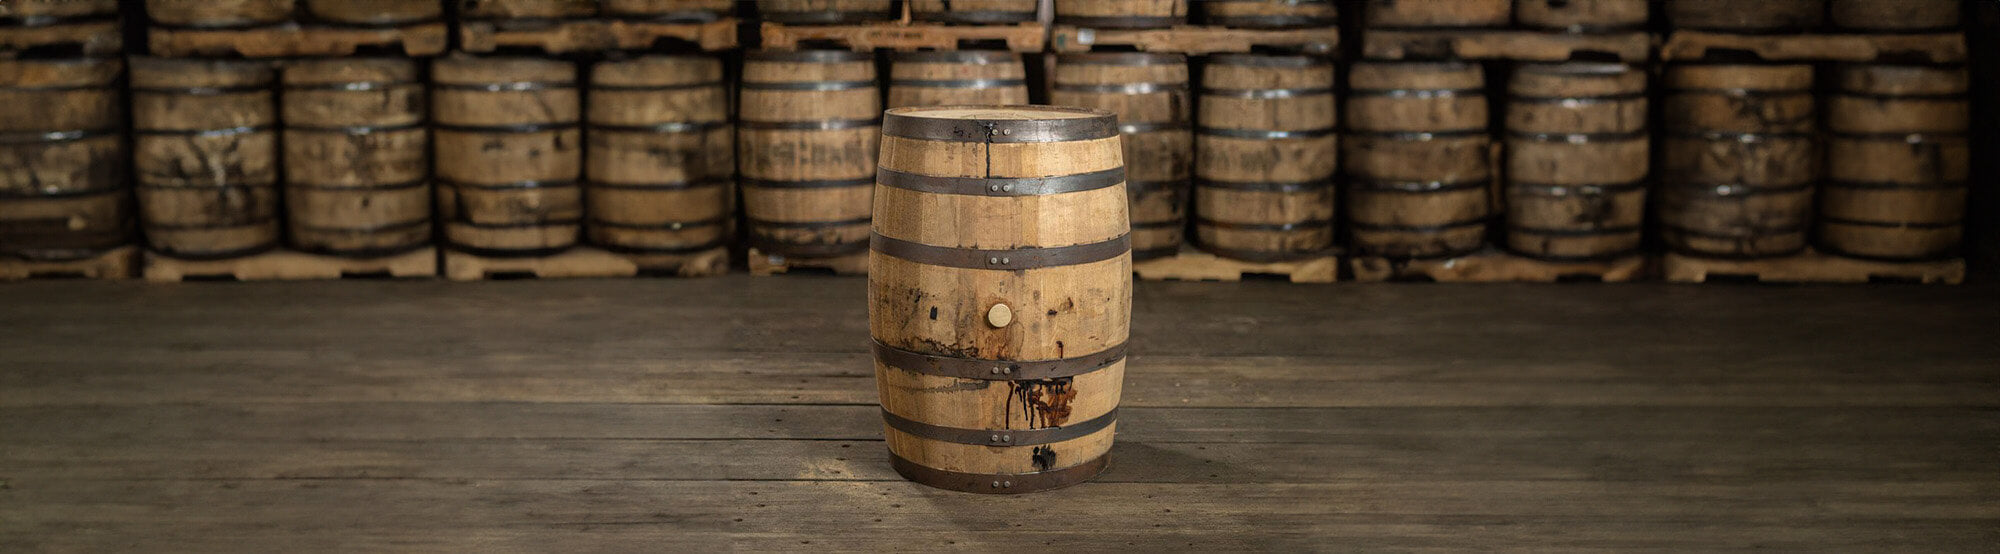 Fresh, used whiskey barrel